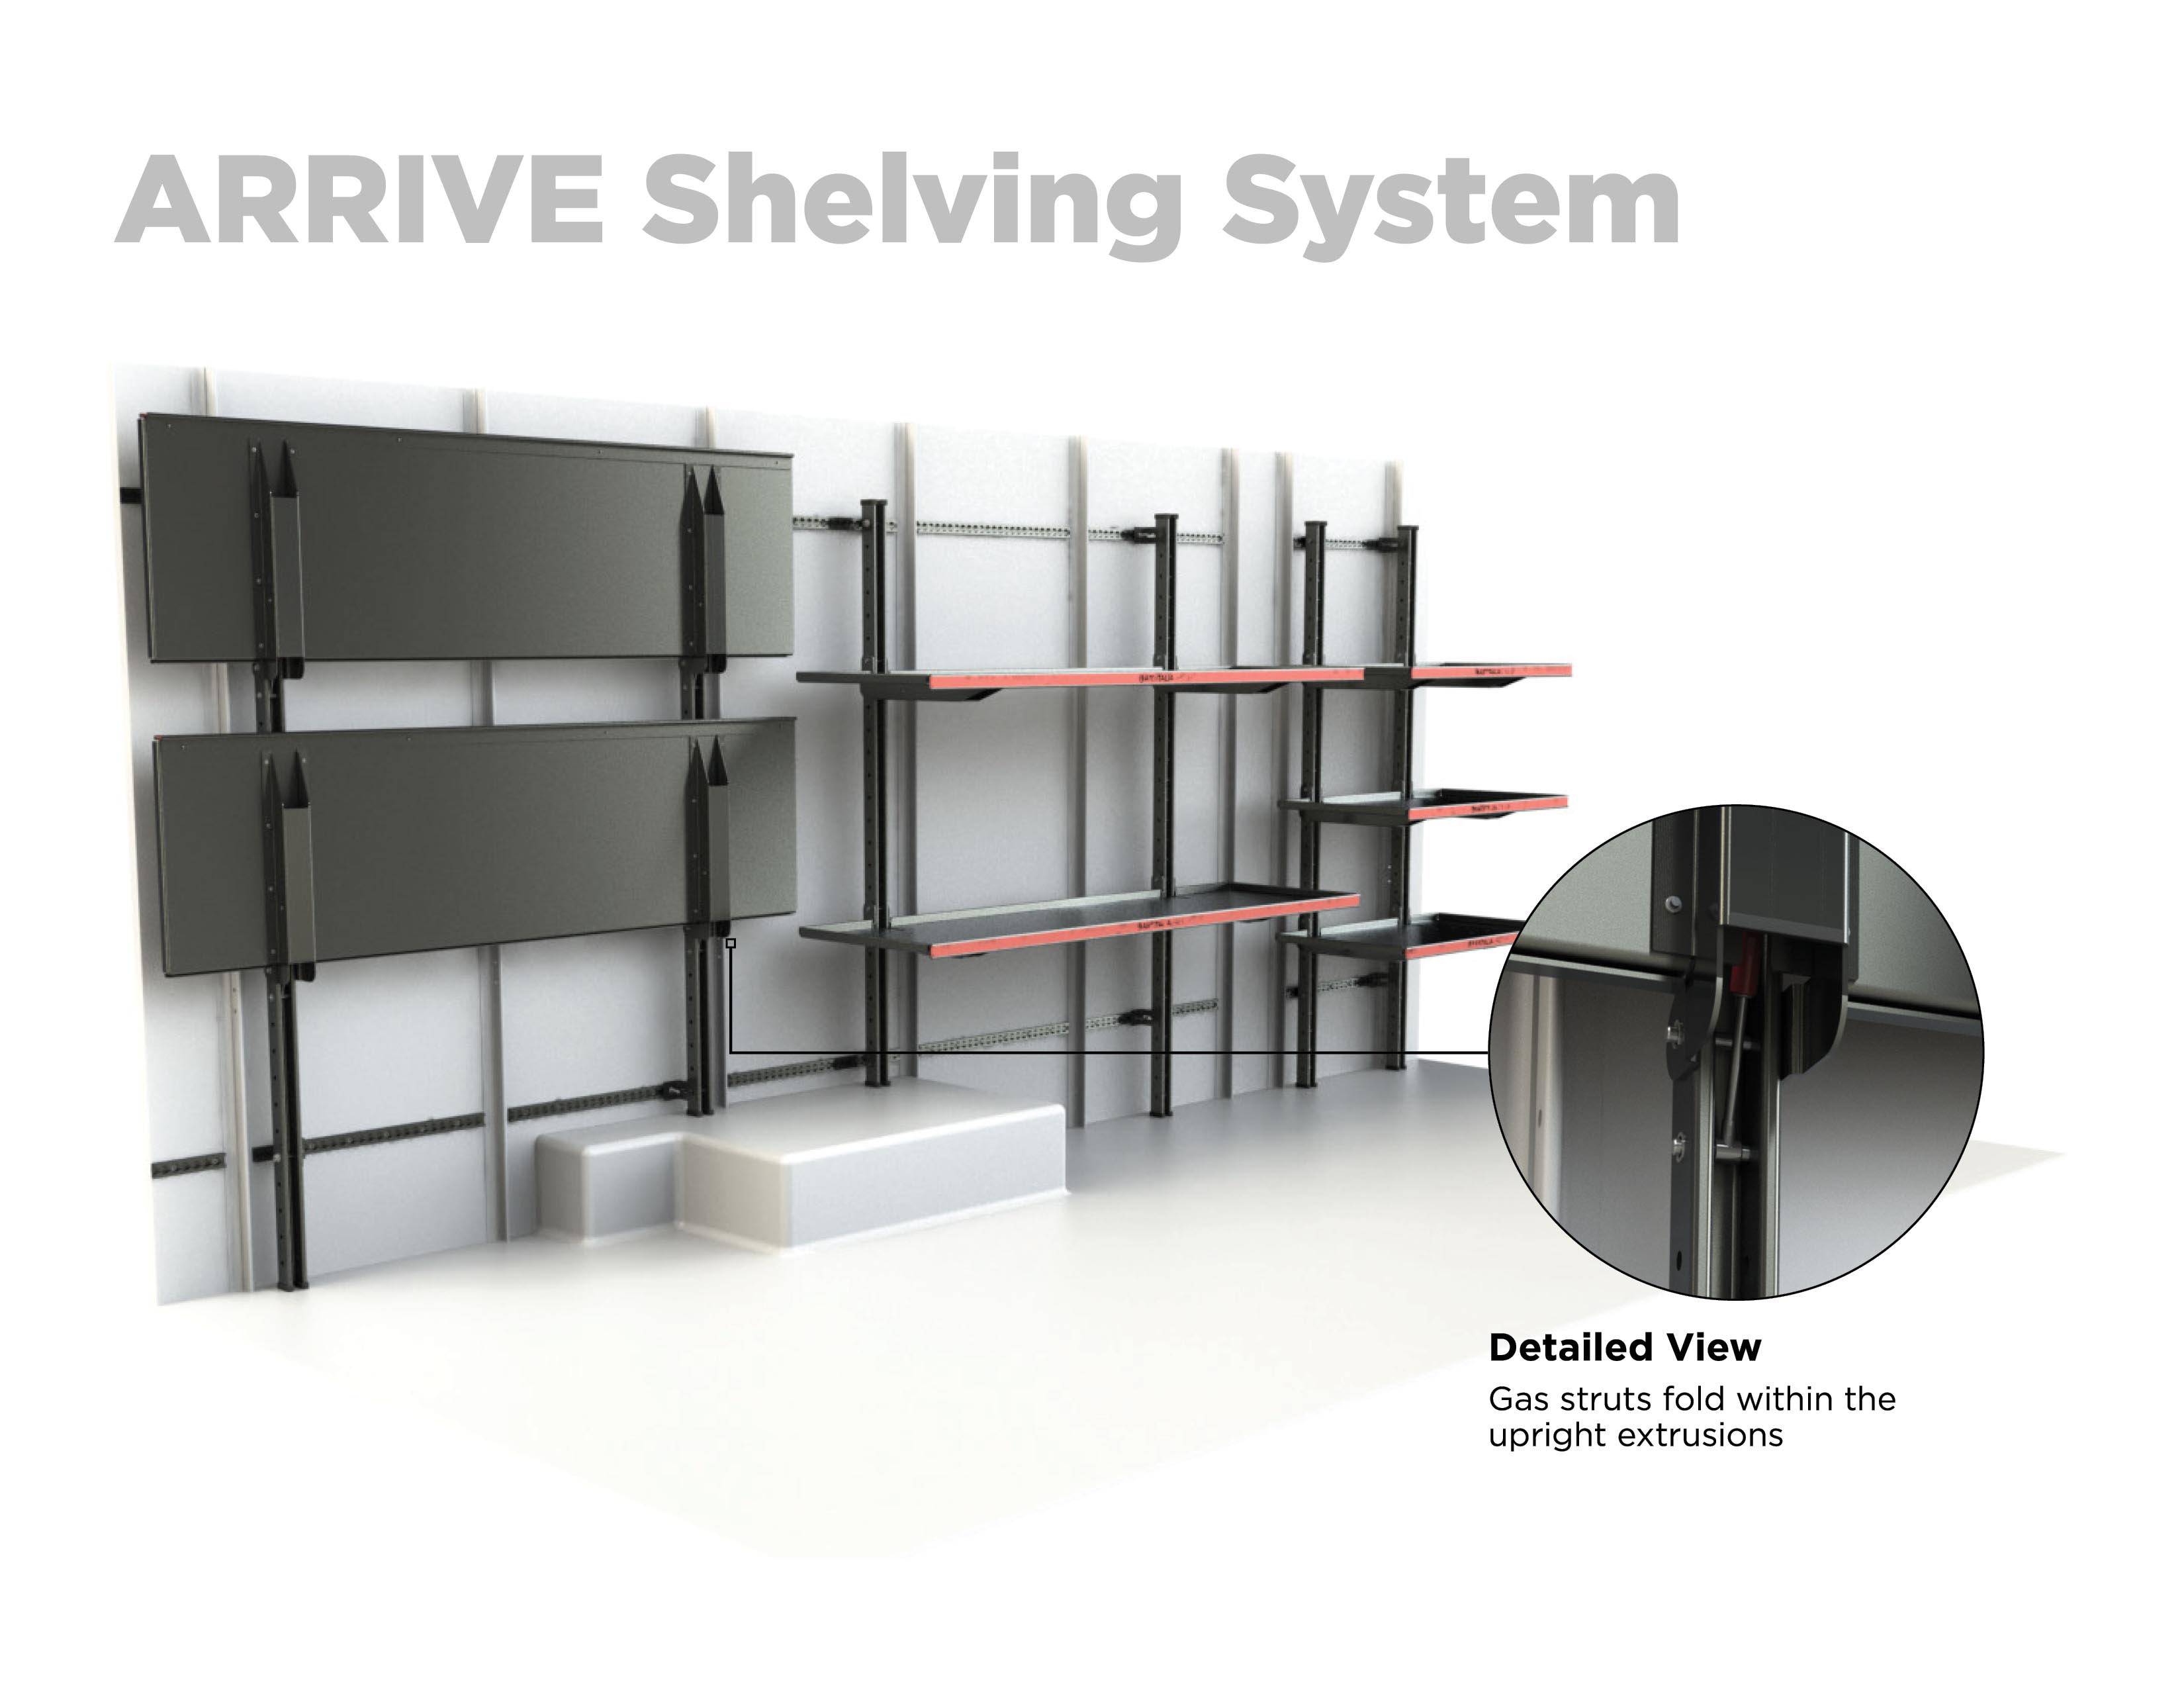 Arrive Shelving System - Material Handling Solutions - Material Handling Equipment - Material Handling - Shipping and Handling - Shelving Solution